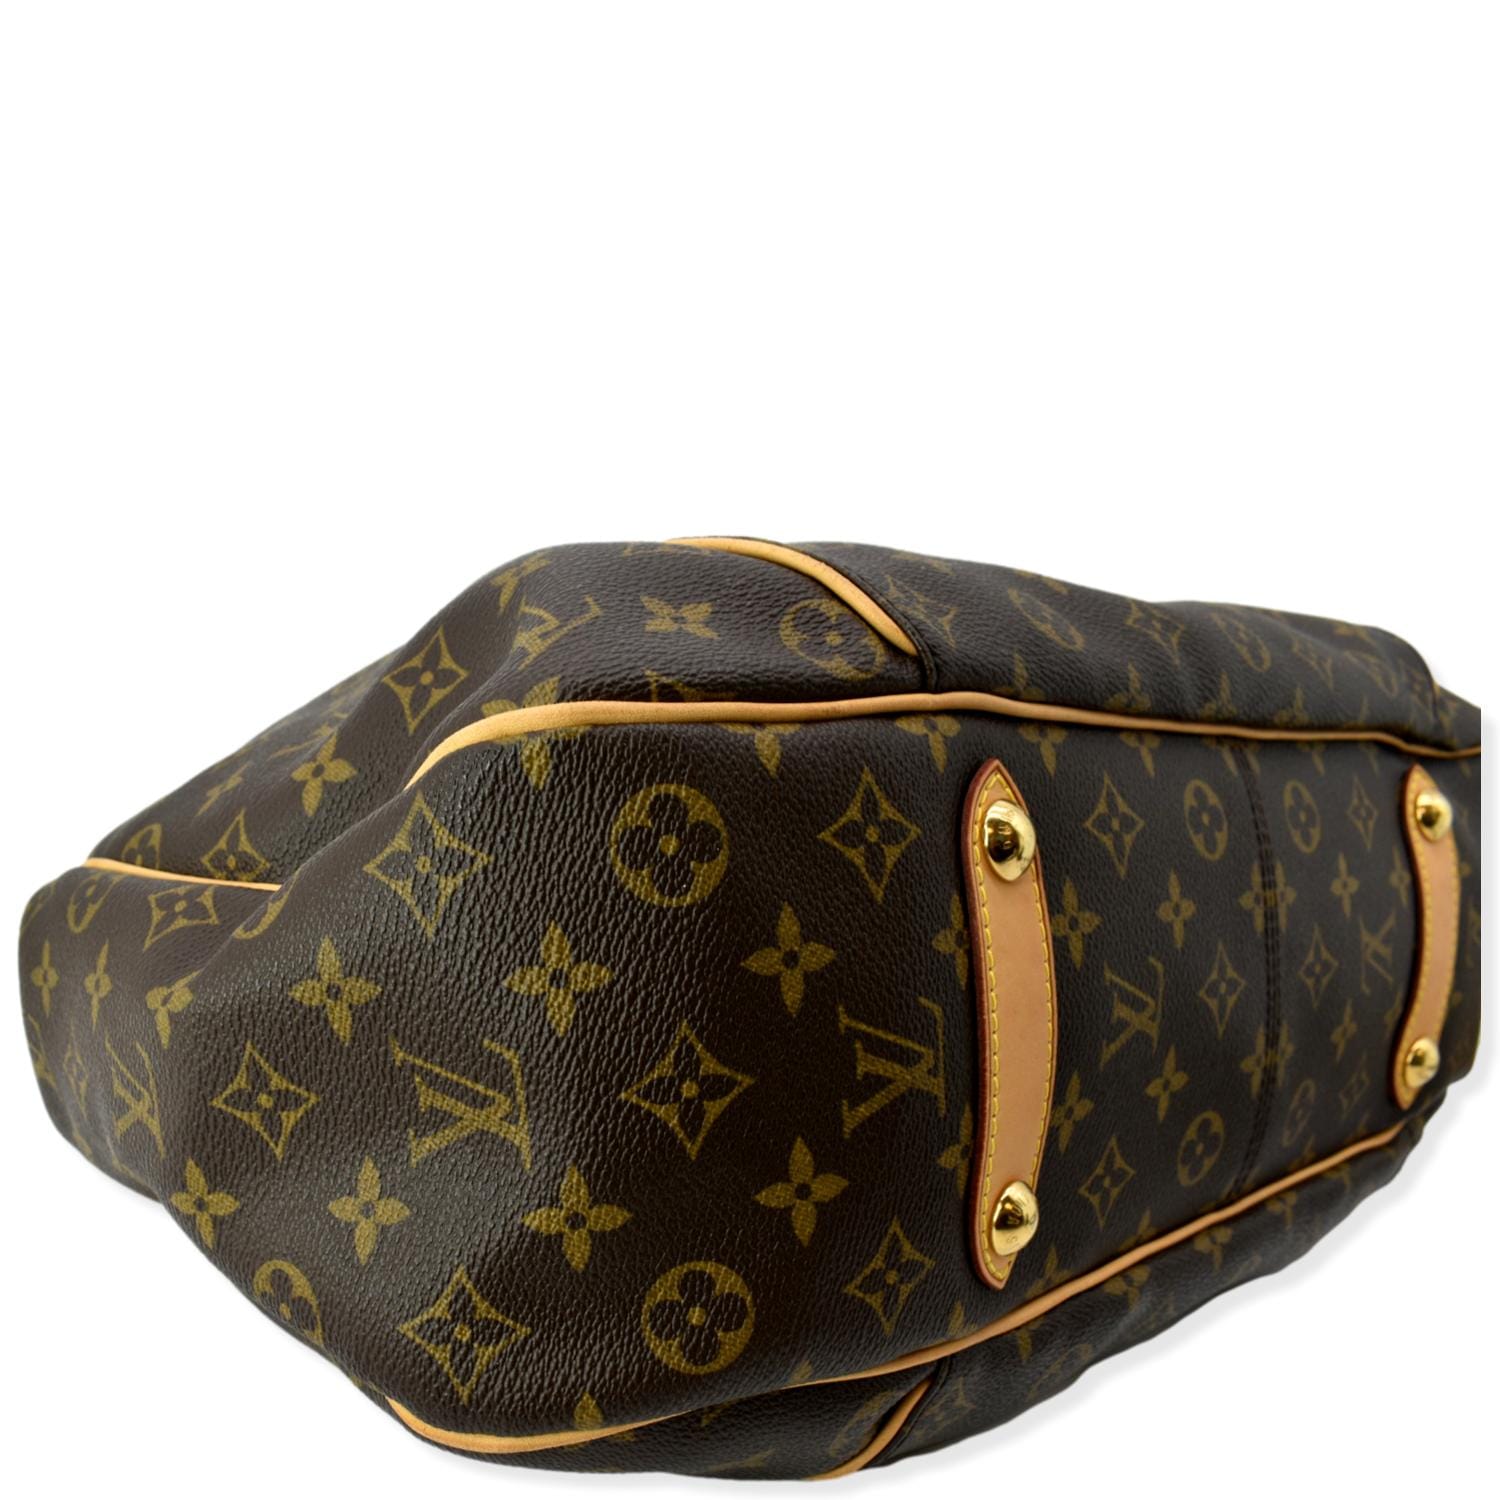 Galliera leather handbag Louis Vuitton Brown in Leather - 32541062